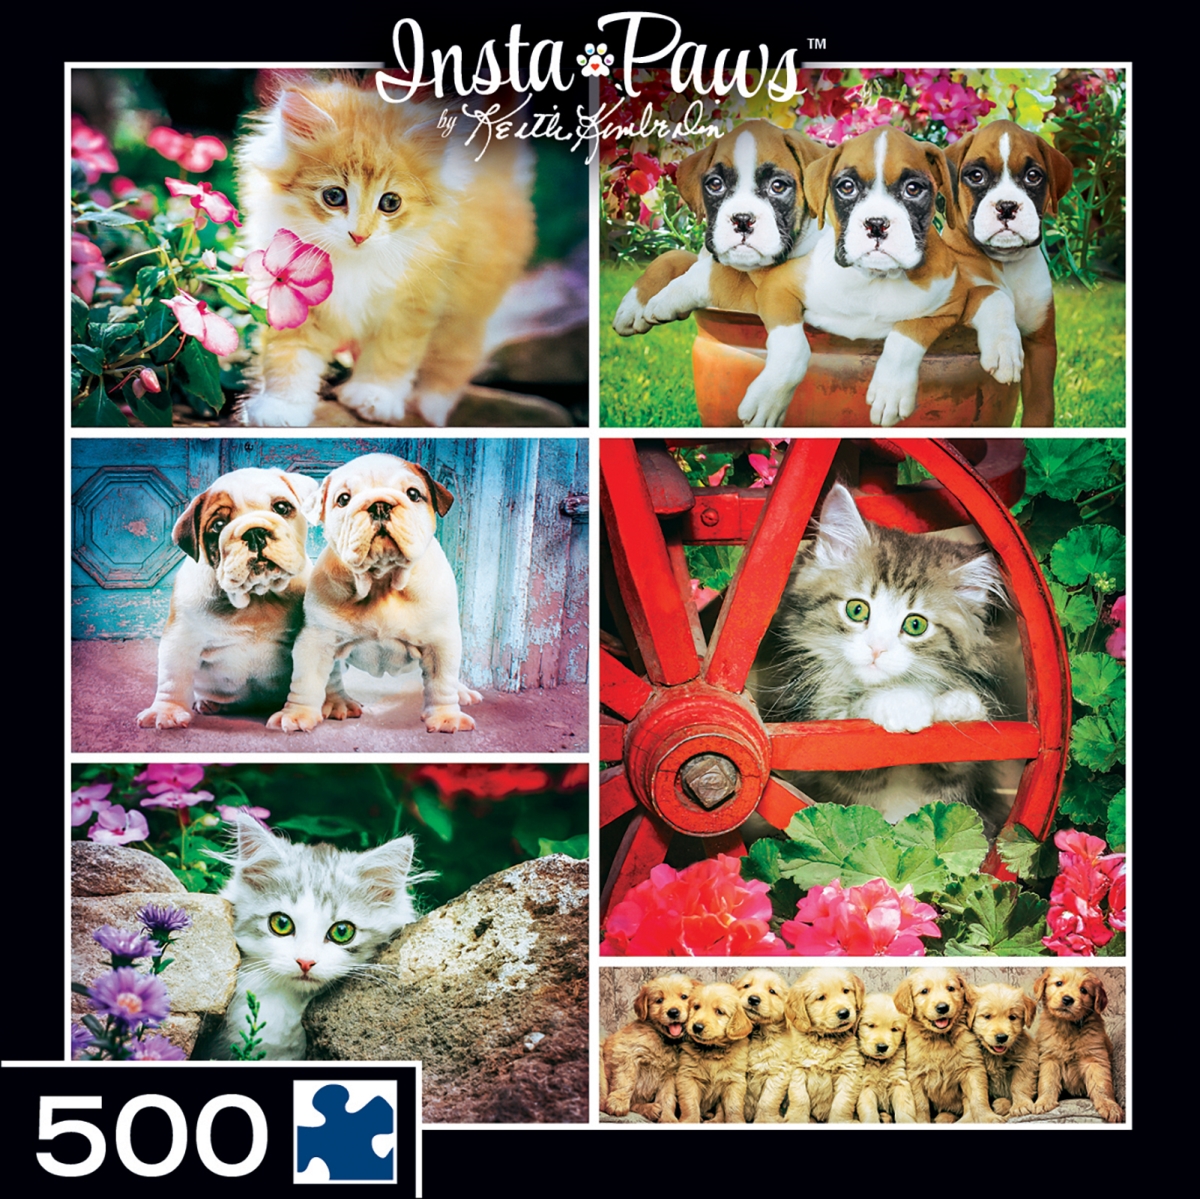 31602 19 X 19 In. Keith Kimberlin Instapaws Fuzzyfriends Puppies & Kittens Jigsaw Puzzle - 500 Piece